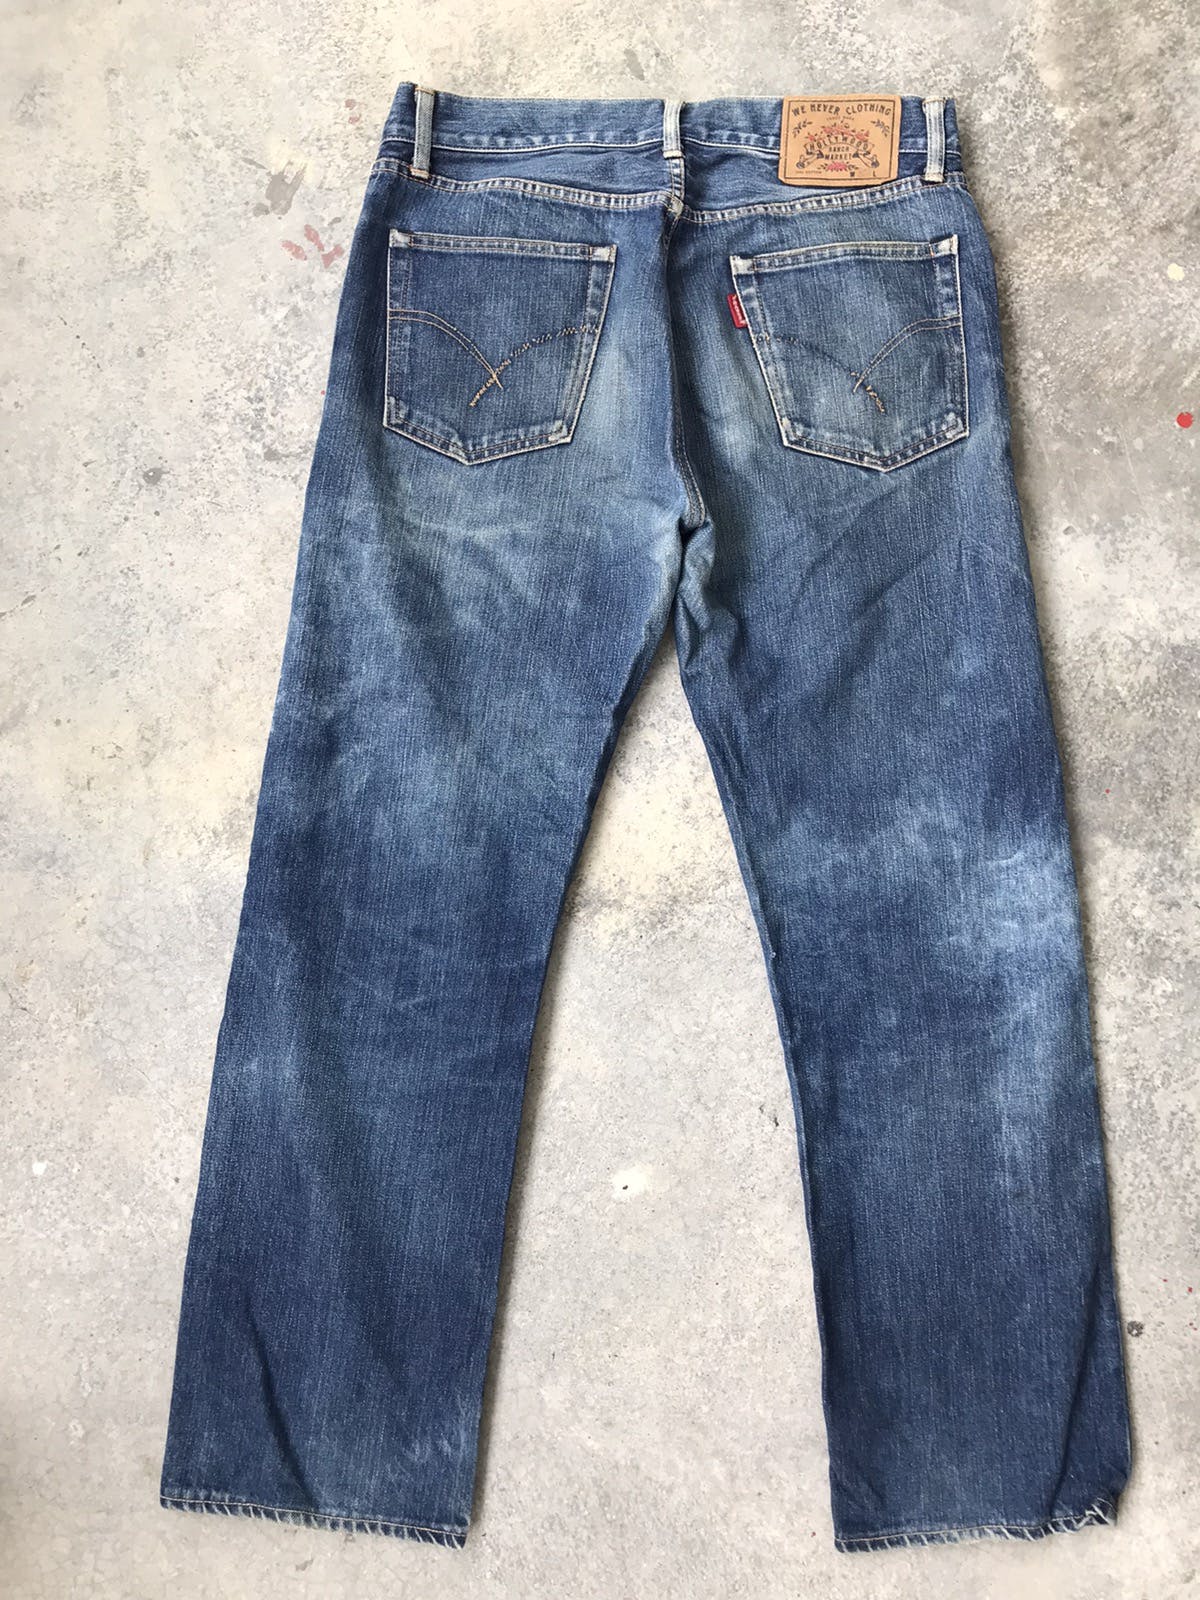 90s Hollywood Ranch Marrket Denim Jeans - 14